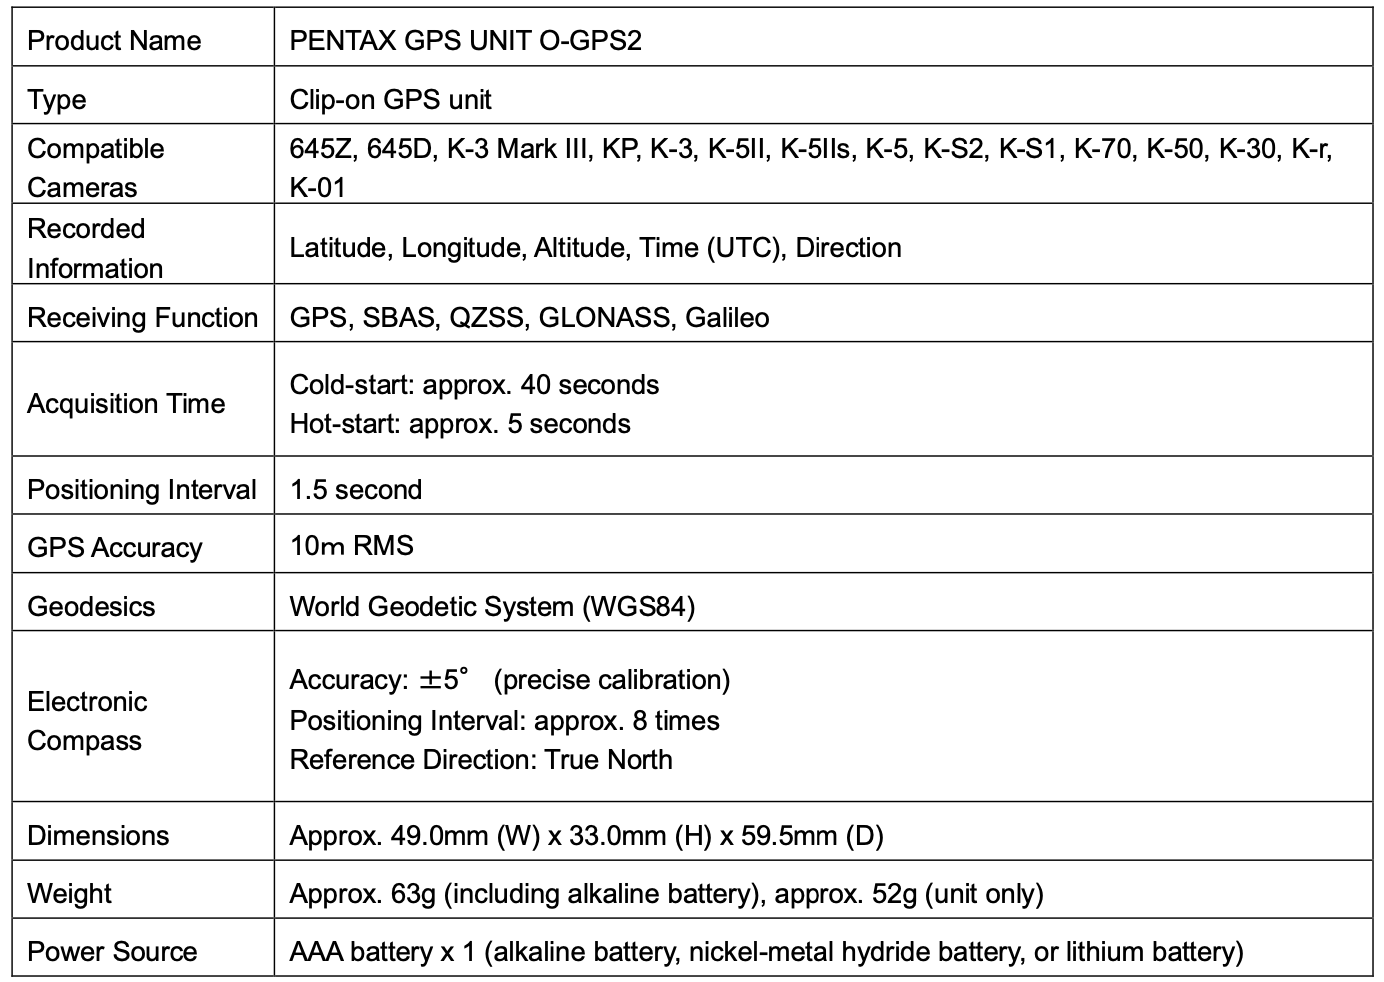 Ricoh announced a new Pentax O-GPS2 GPS unit for Pentax DSLR